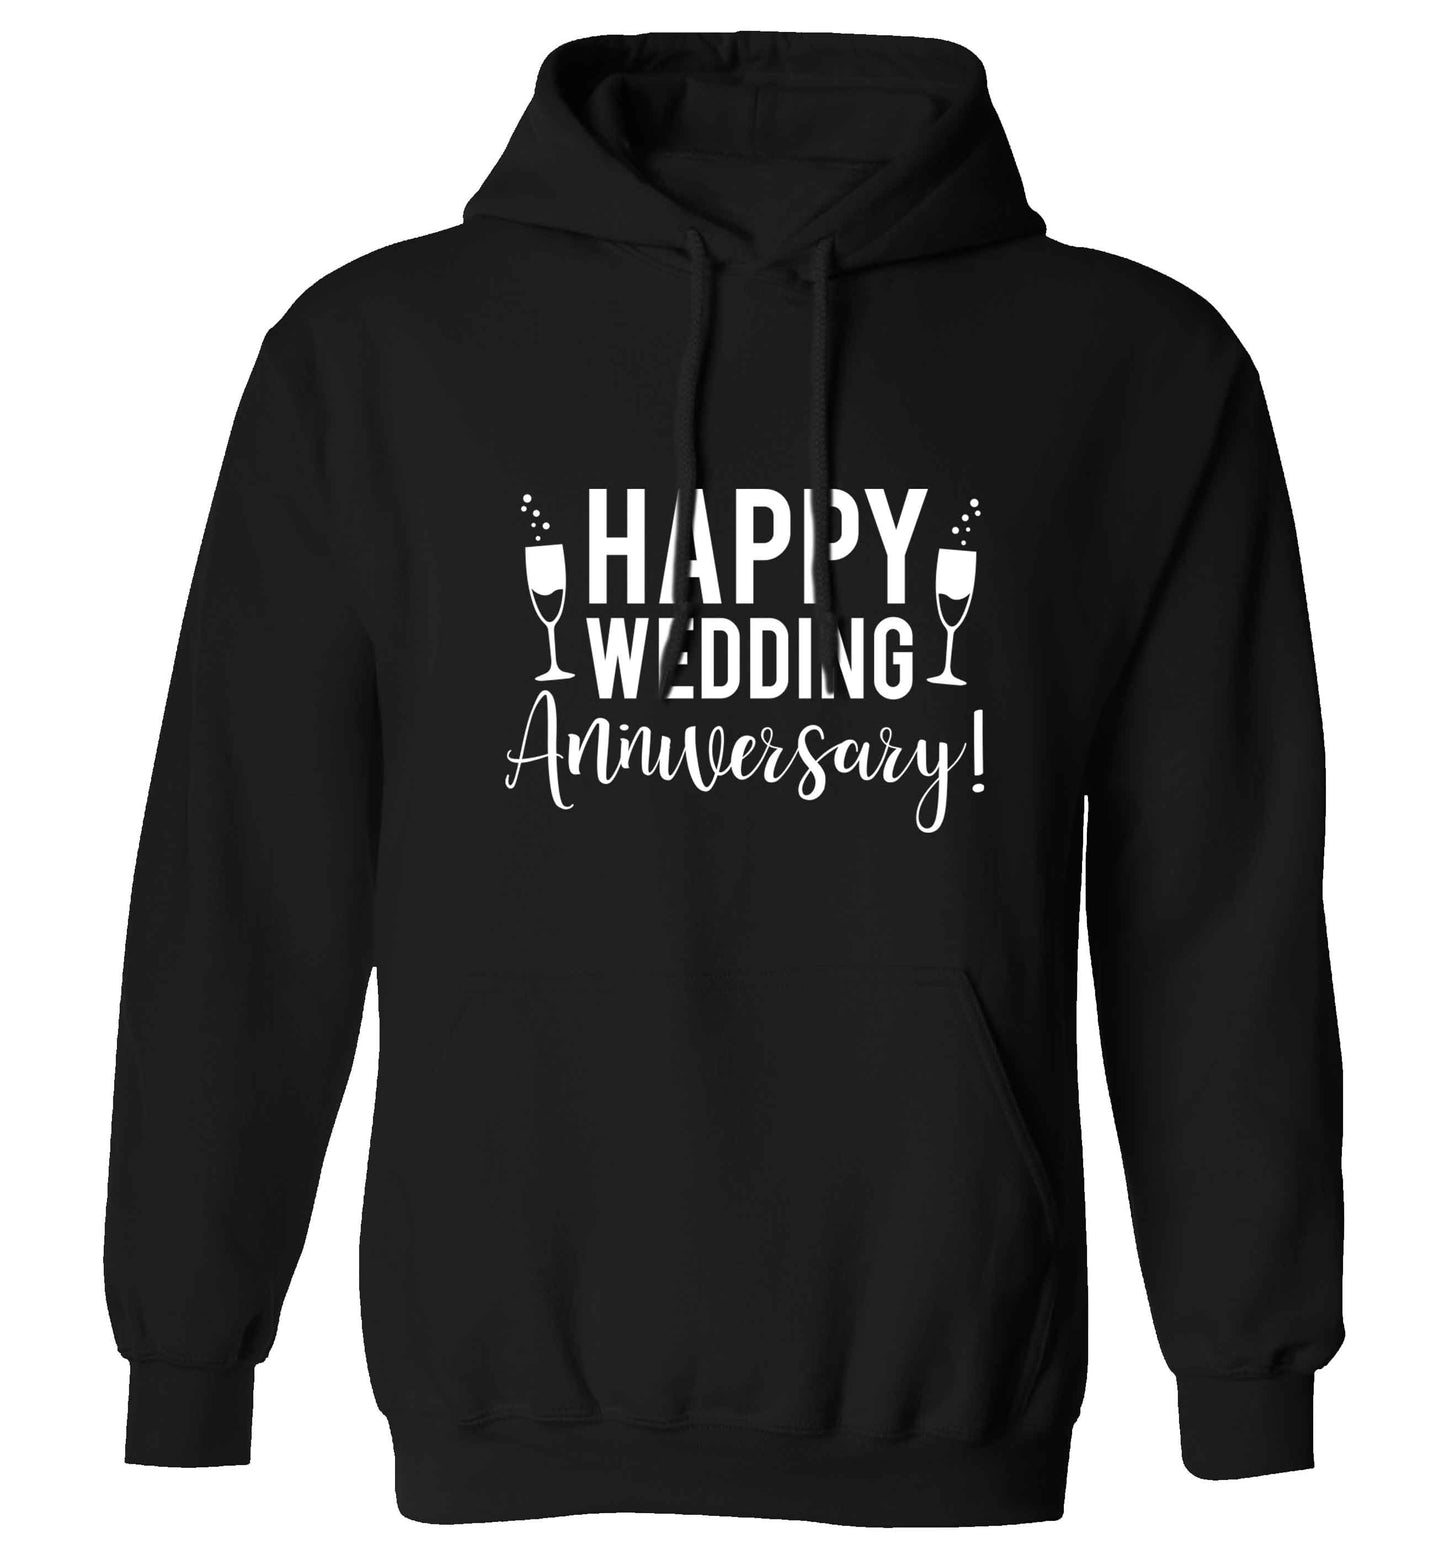 Happy wedding anniversary! adults unisex black hoodie 2XL